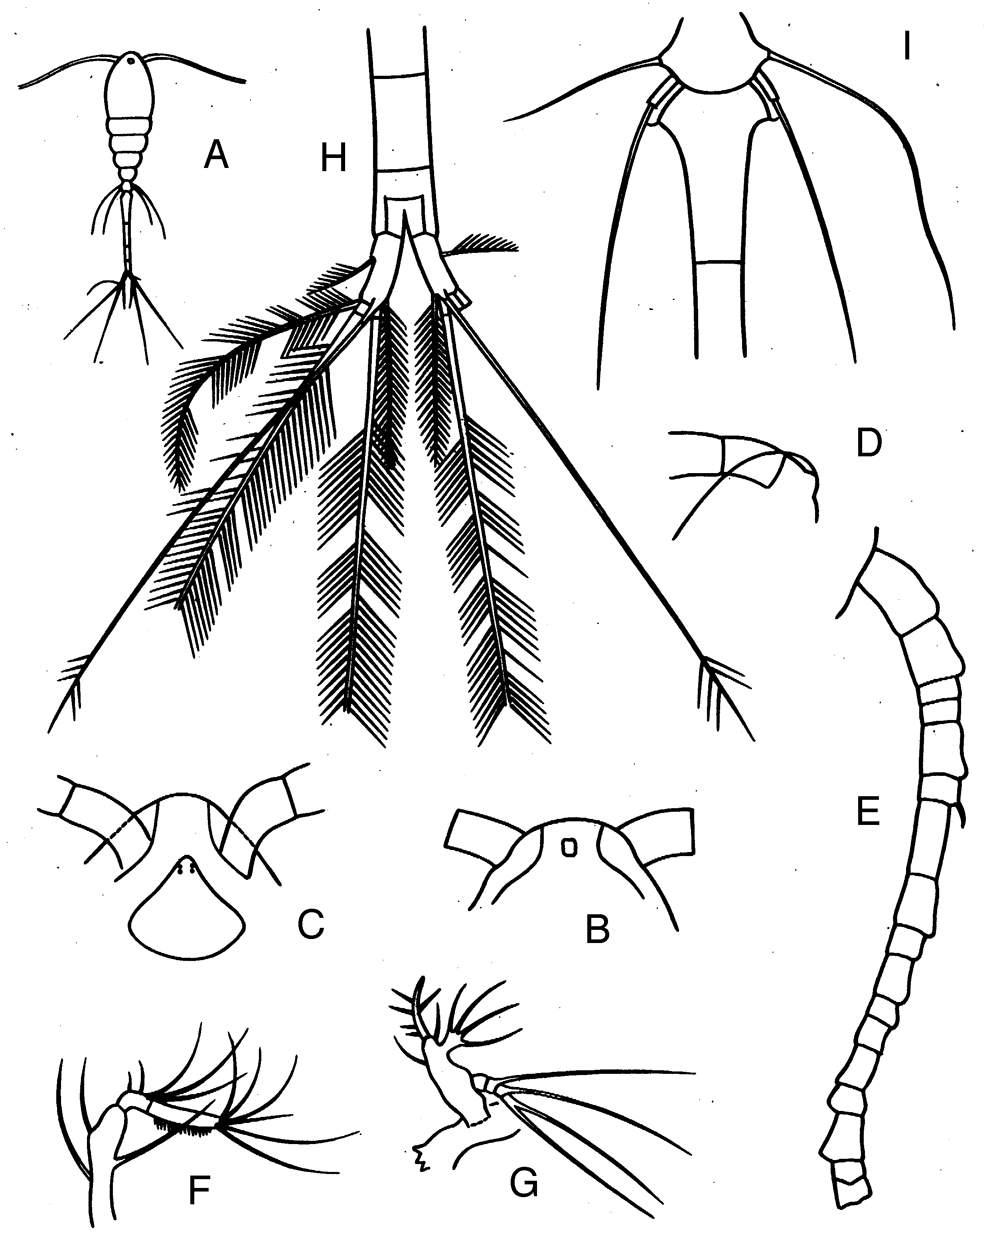 Species Oithona nana - Plate 16 of morphological figures